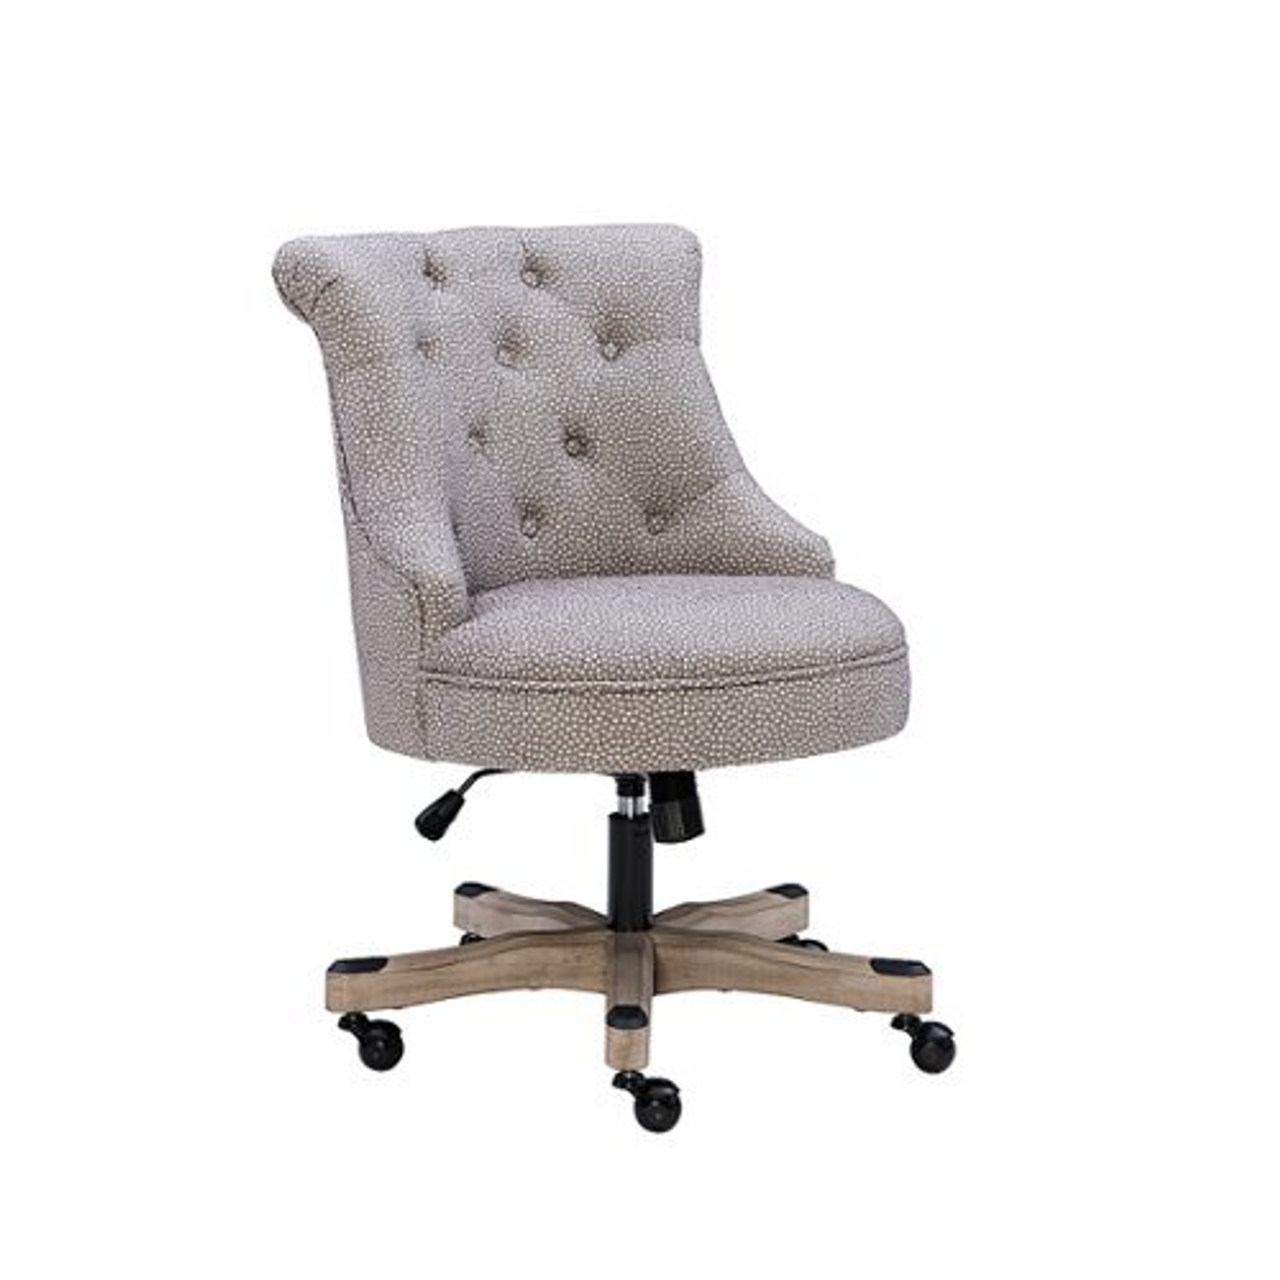 Linon Home Décor - Scotmar Office Chair - Light Gray